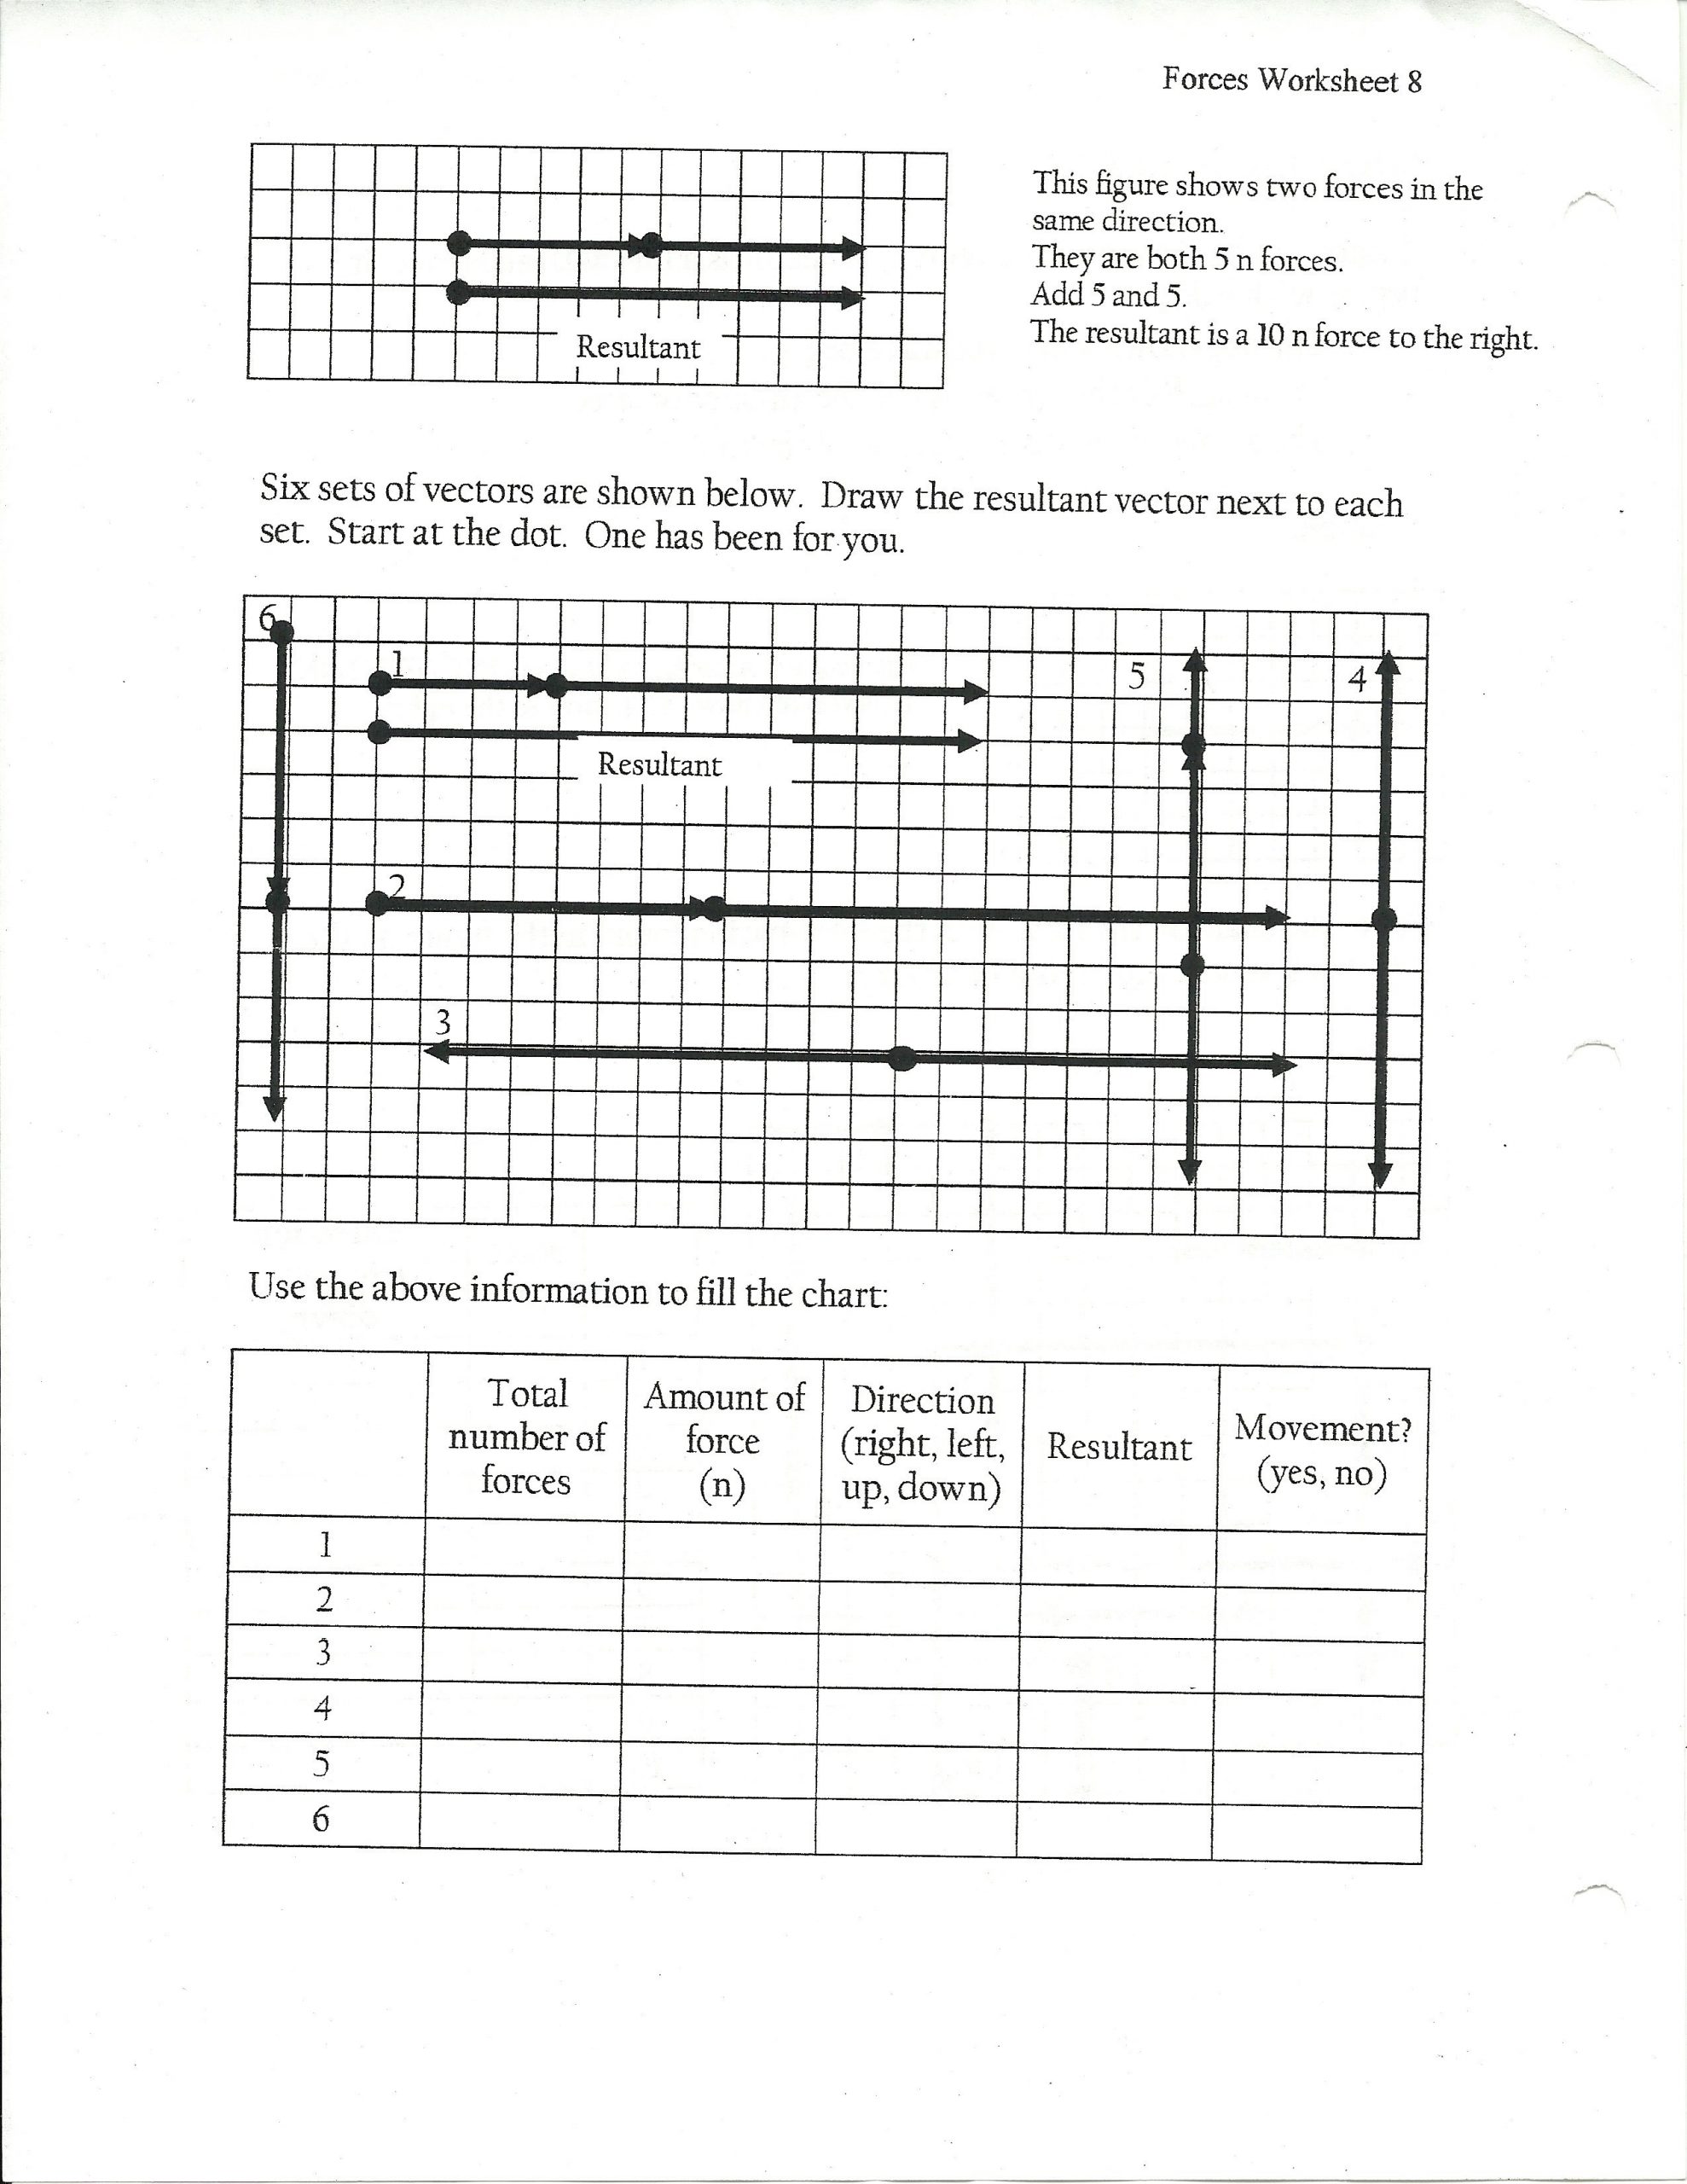 Forces Worksheet 1 Answer Key Hr Diagram Worksheet Answer Key